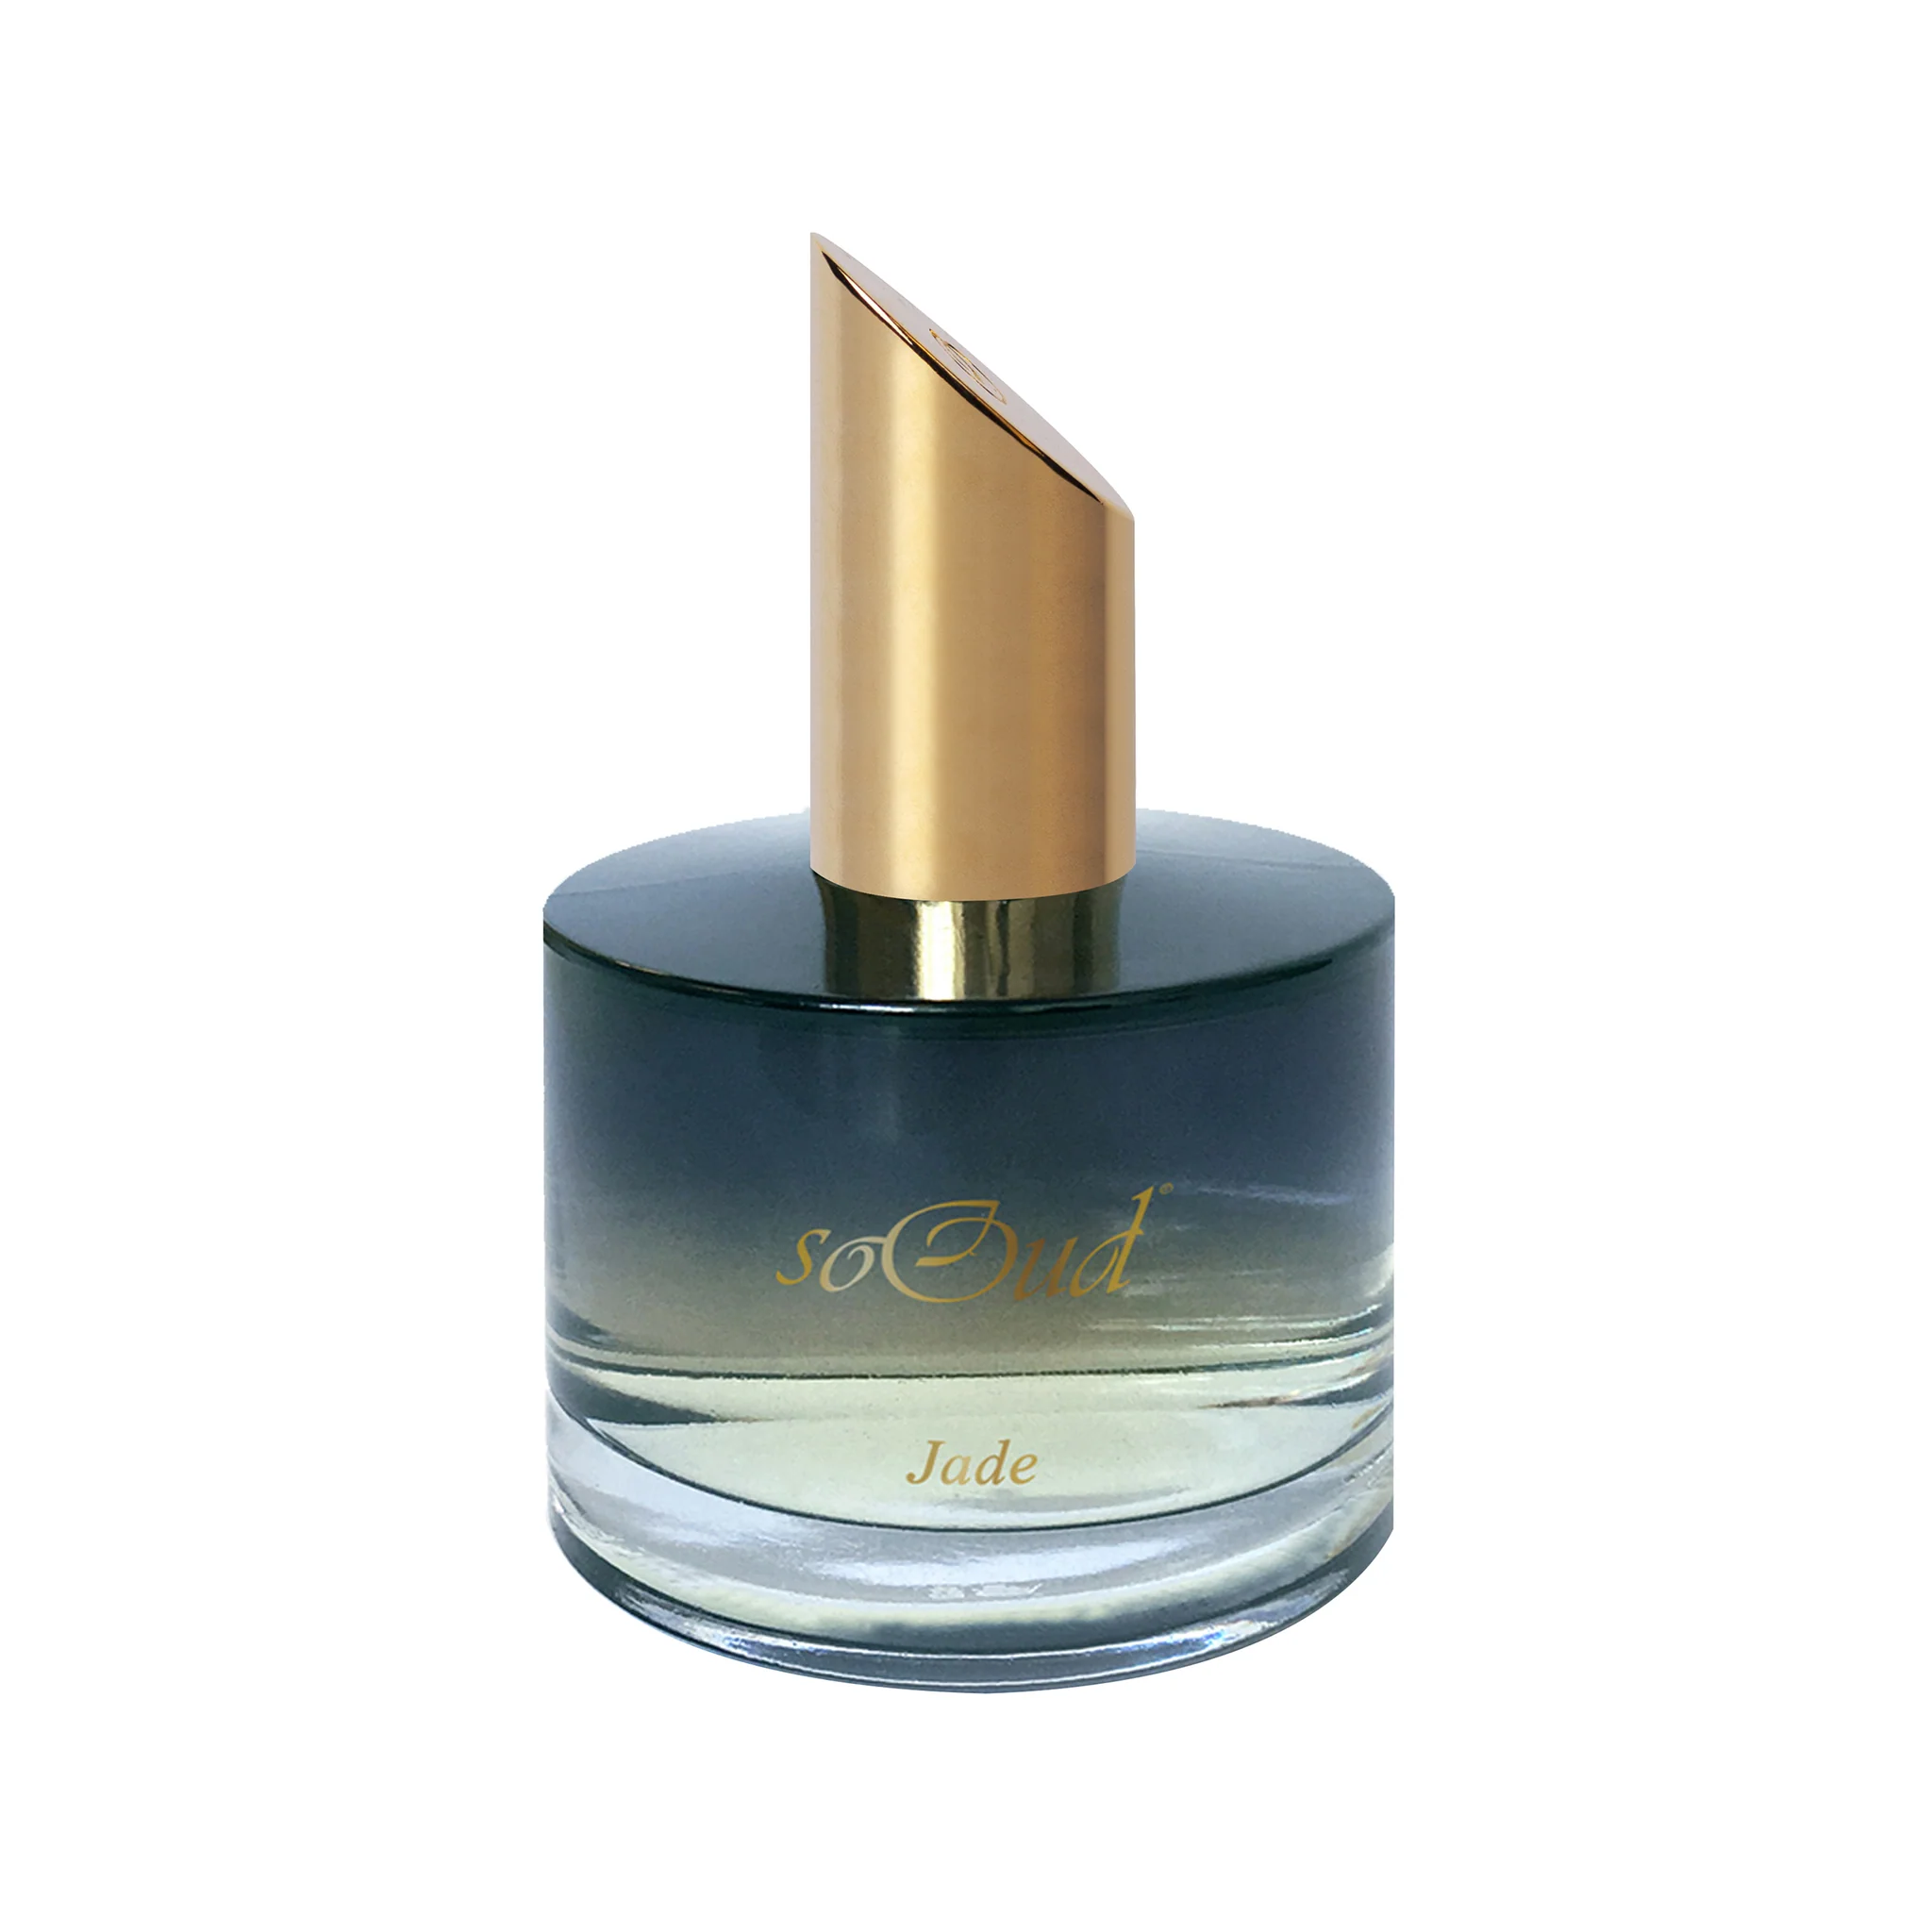 SOOUD_JADE_Eau_Fine_perfume_fragrance_luxury_niche_100ml_1024x1024@2x.webp